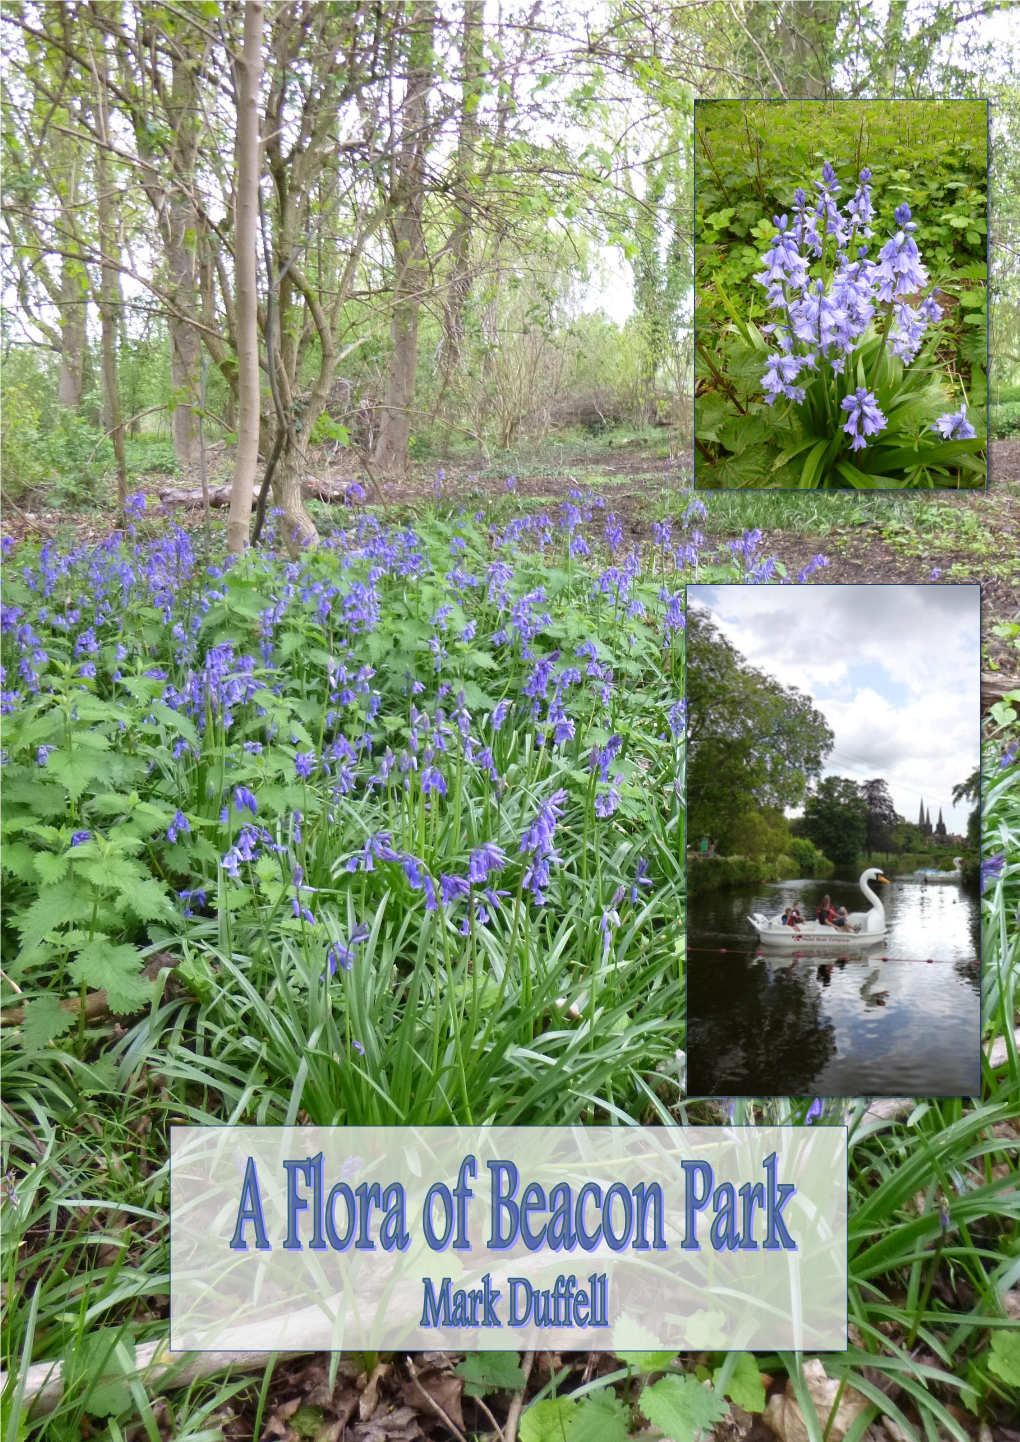 The Flora of Beacon Park 2014